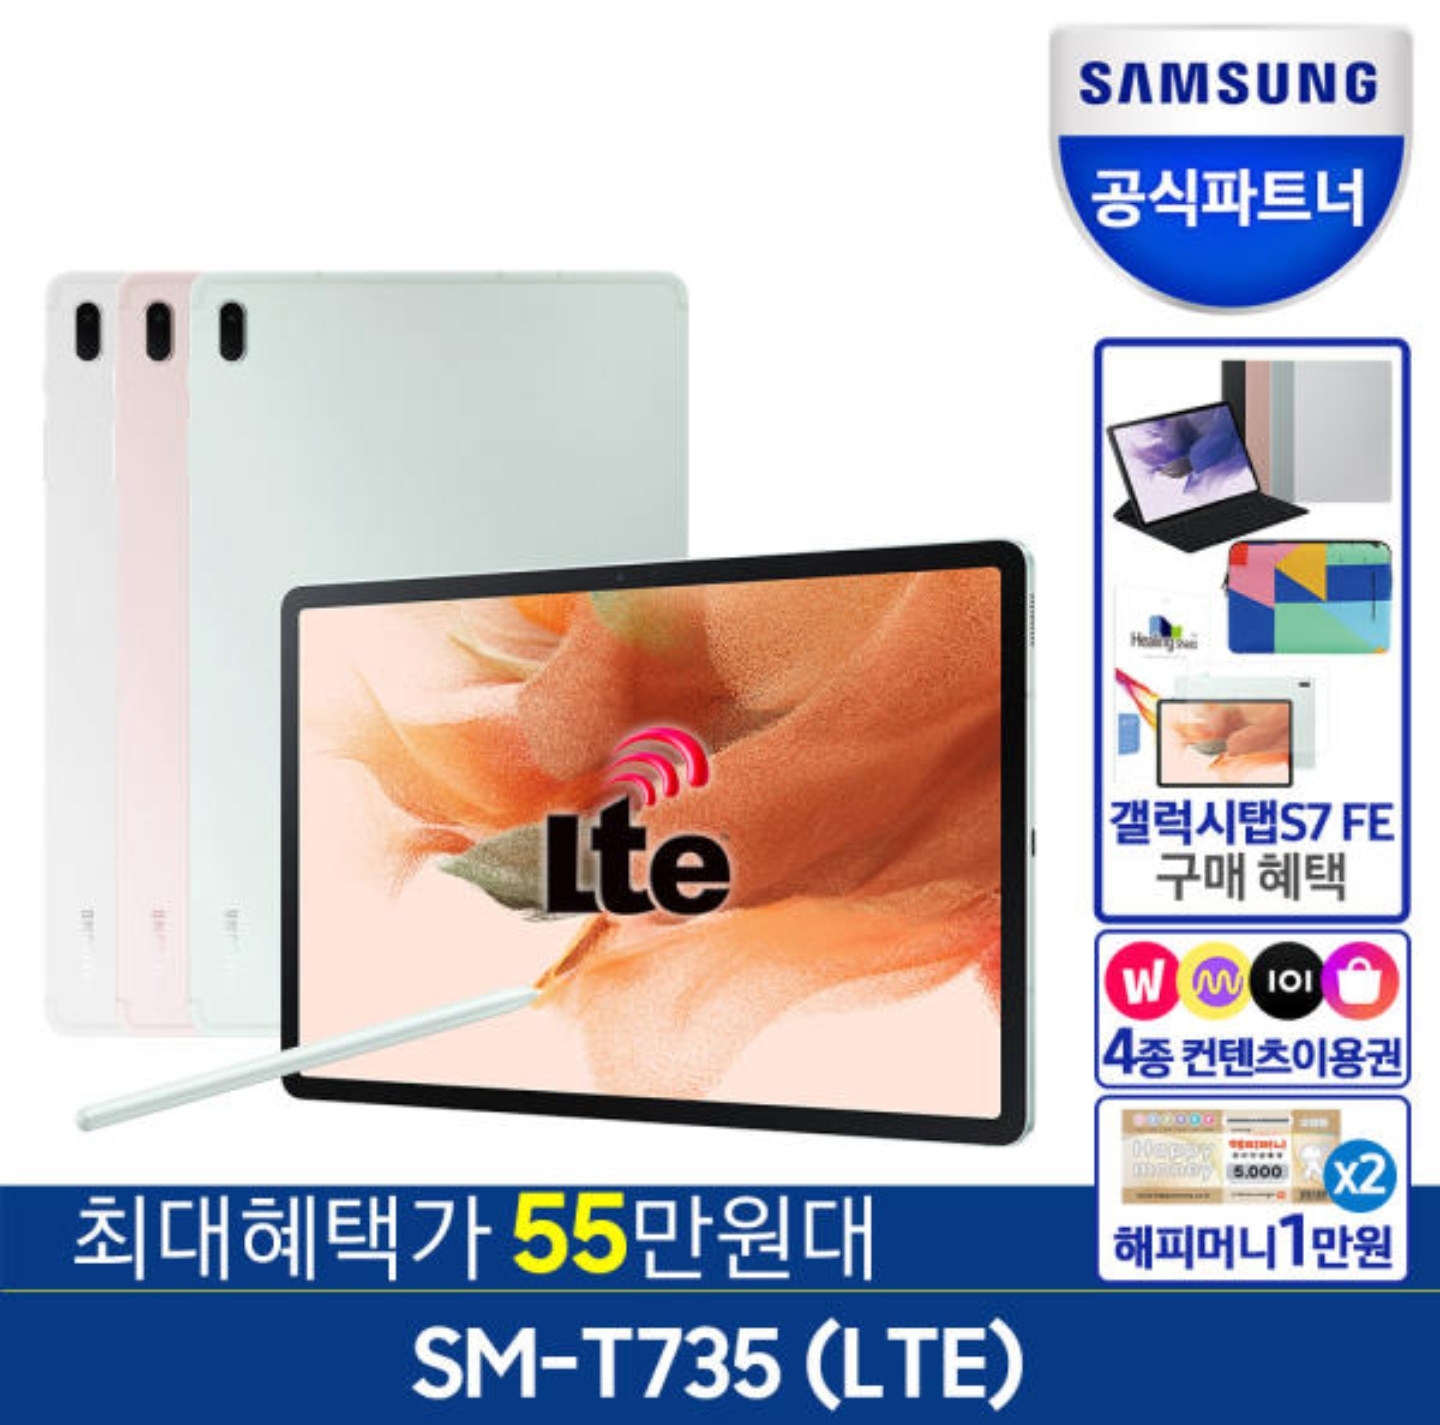 SmartSelect_20210718-235702_Samsung Internet Beta.jpg